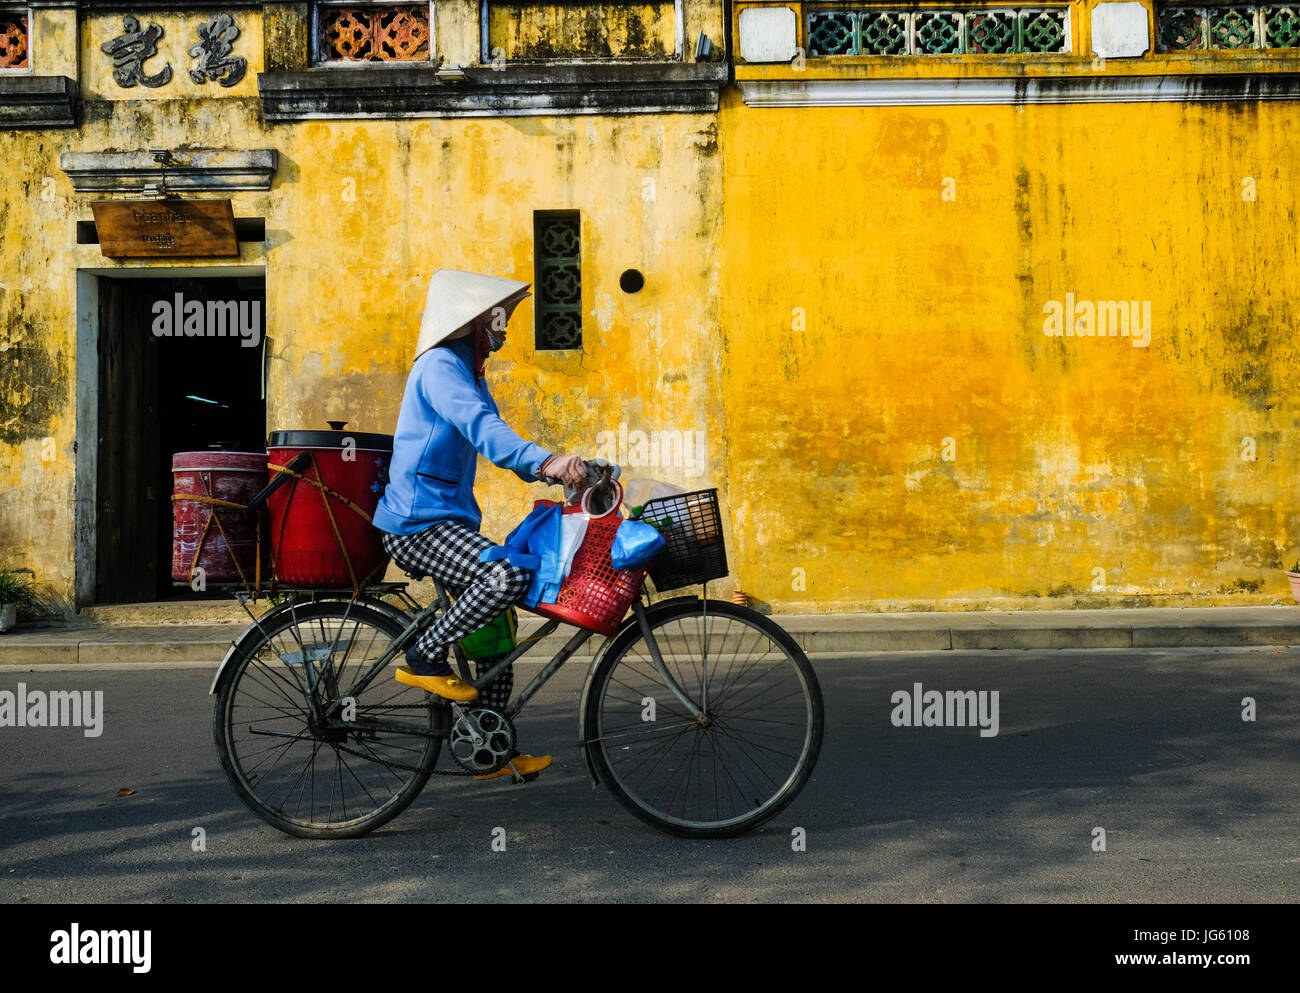 A Vietnamese woman rides a bike in a street in Hoi An, Vietnam Stock Photo